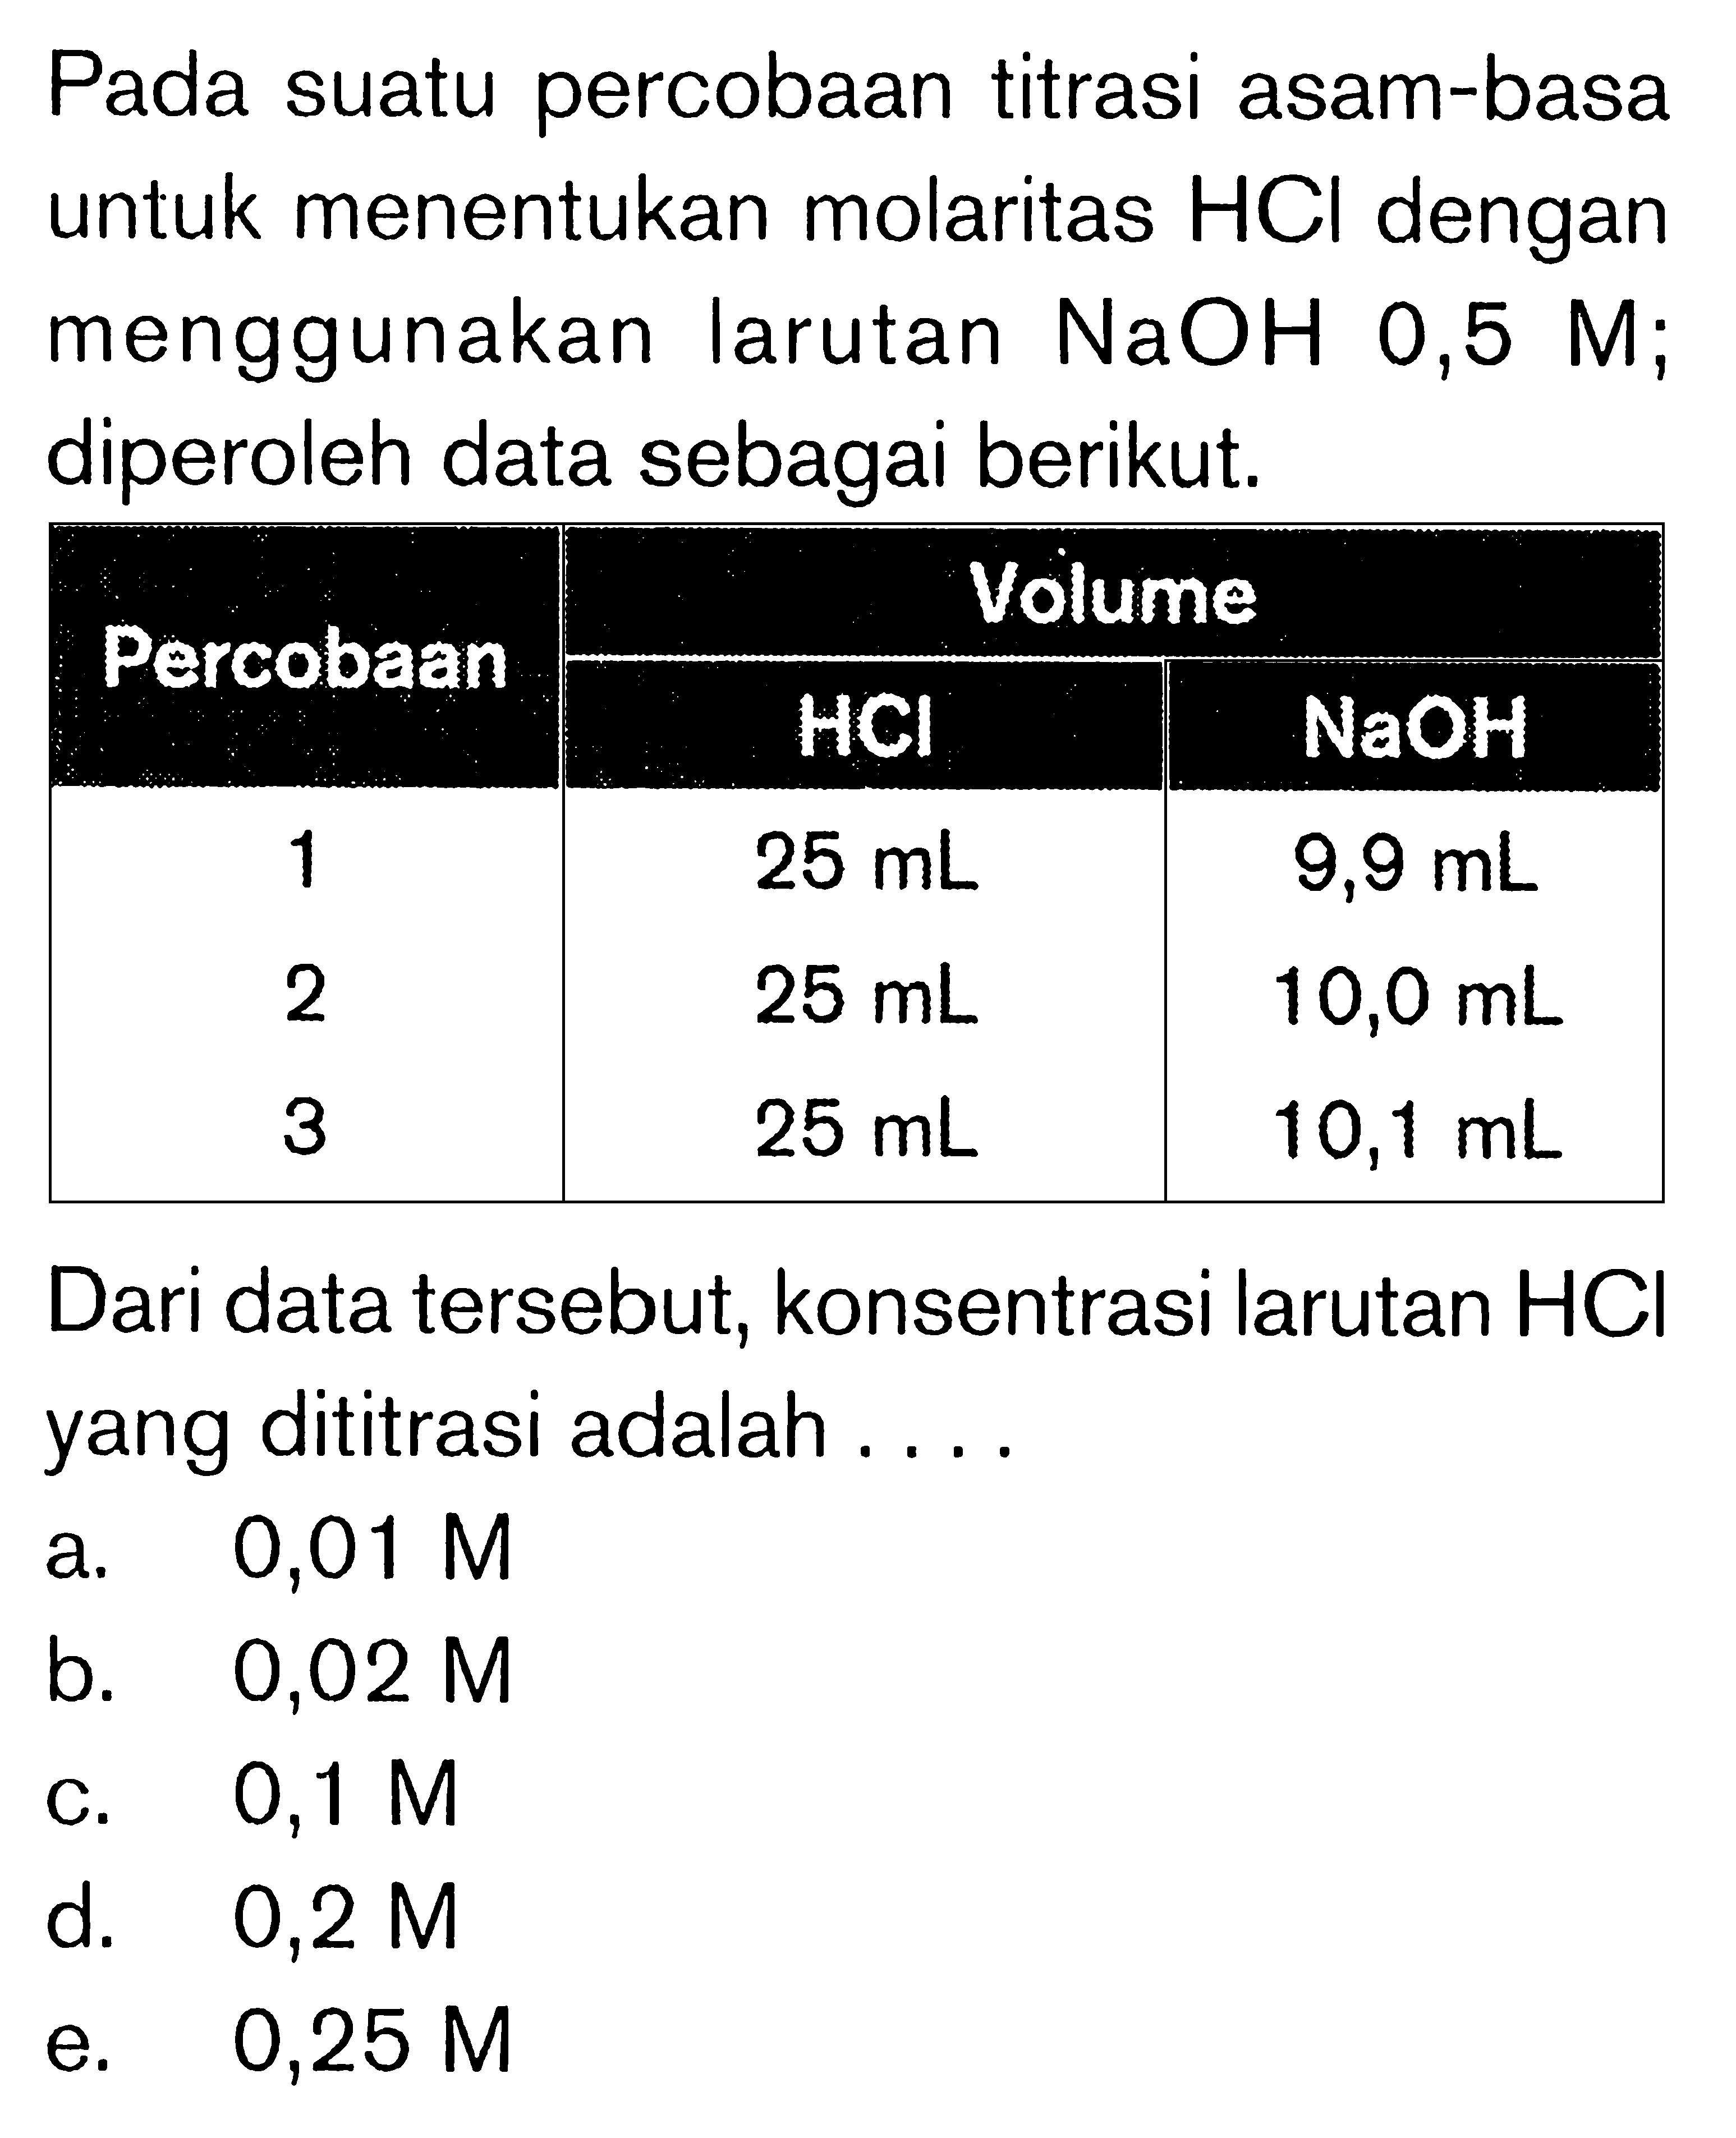 Pada suatu percobaan titrasi asam-basa untuk menentukan molaritas HCl dengan menggunakan larutan NaOH 0,5 M; diperoleh data sebagai berikut.Percobaan Volume   HCl NaOH  1 25 mL 9,9 mL  2 25 mL 10,0 mL  3 25 mL 10,1 mL  Dari data tersebut, konsentrasi larutan HCl yang dititrasi adalah....